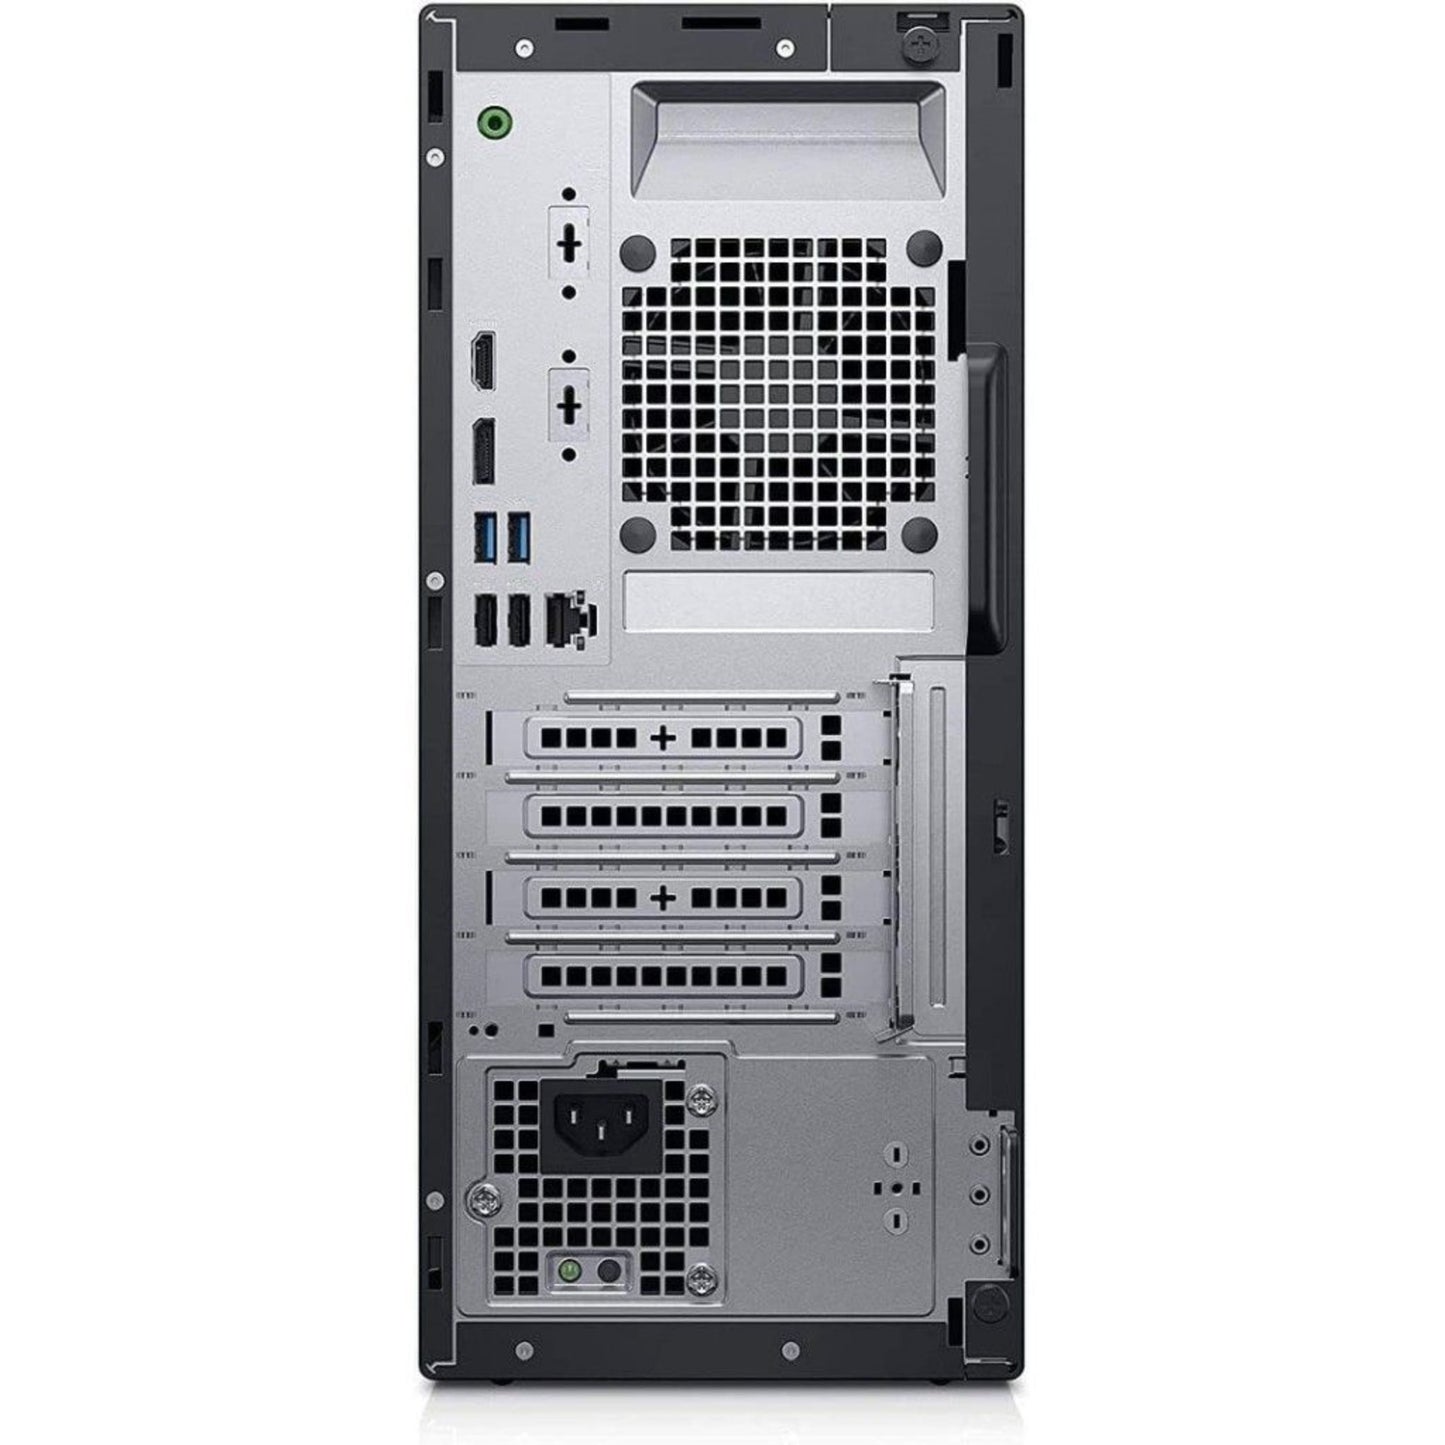 Dell OptiPlex 3060 Tower Desktop Intel Core i7 (8th-Gen) Bahrain Goods